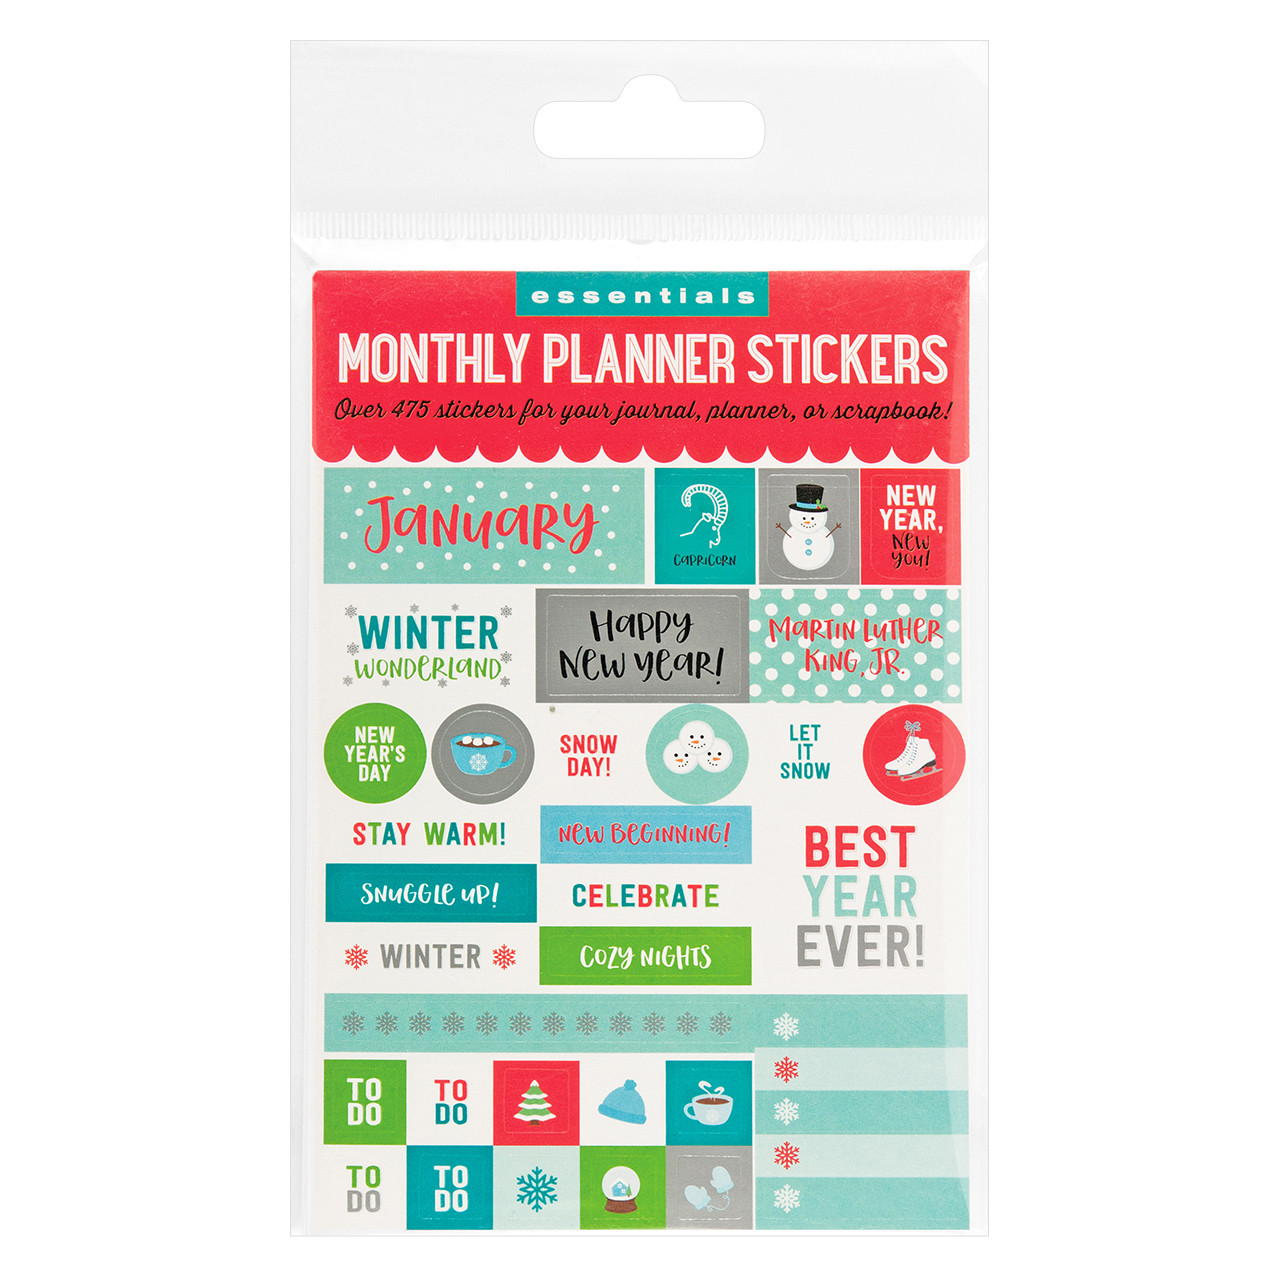 Monthly Planner Stickers - Franklin Planner